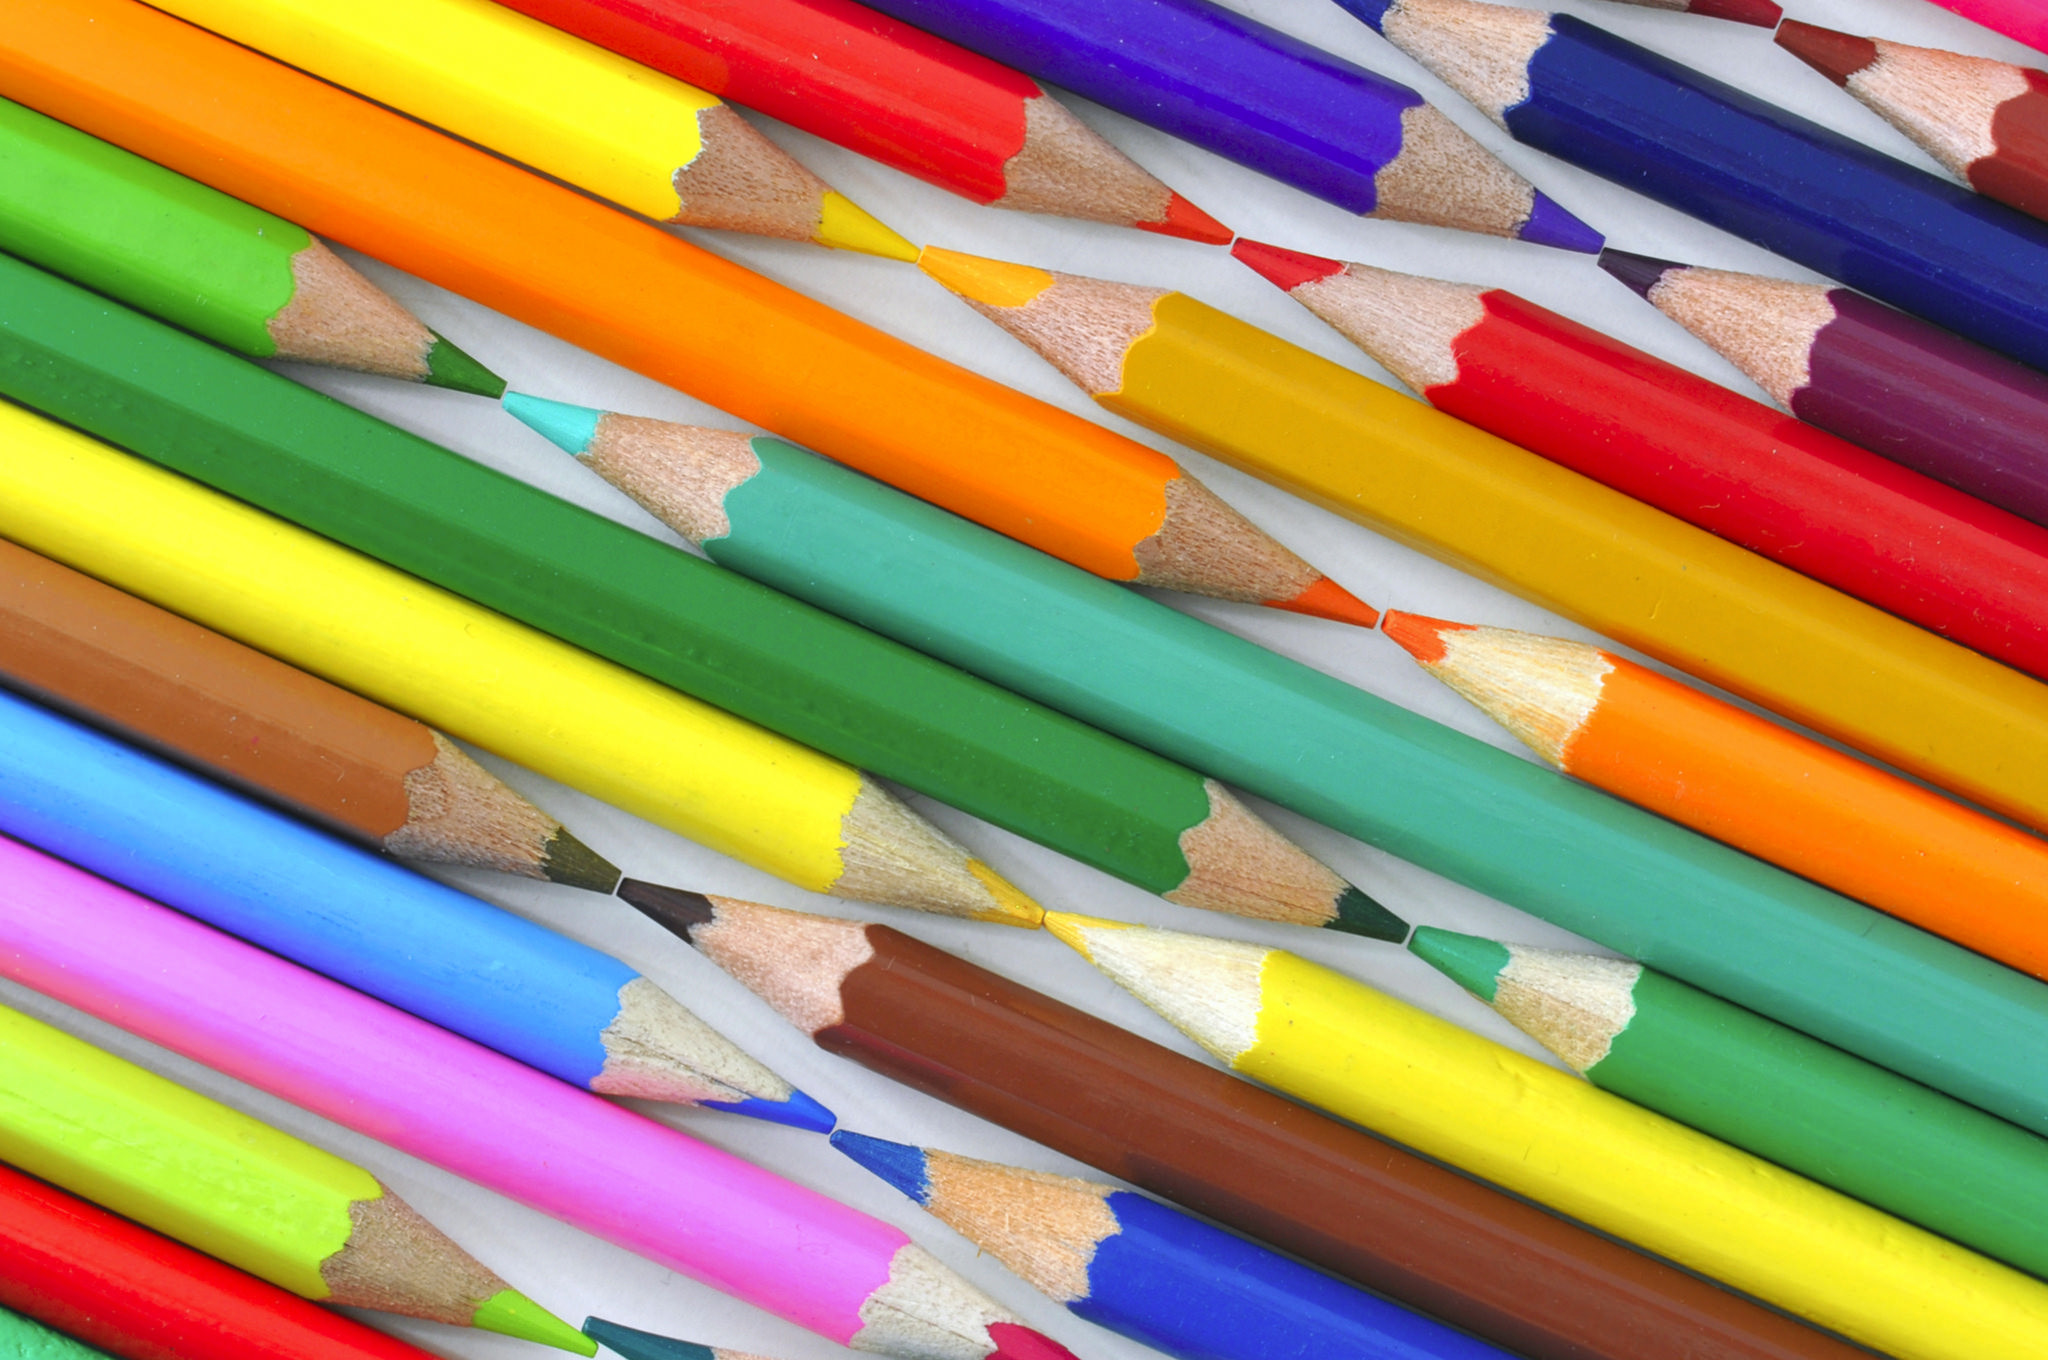 colored pencils, miscellanea, miscellaneous, pencils, rod, colour pencils, kernel